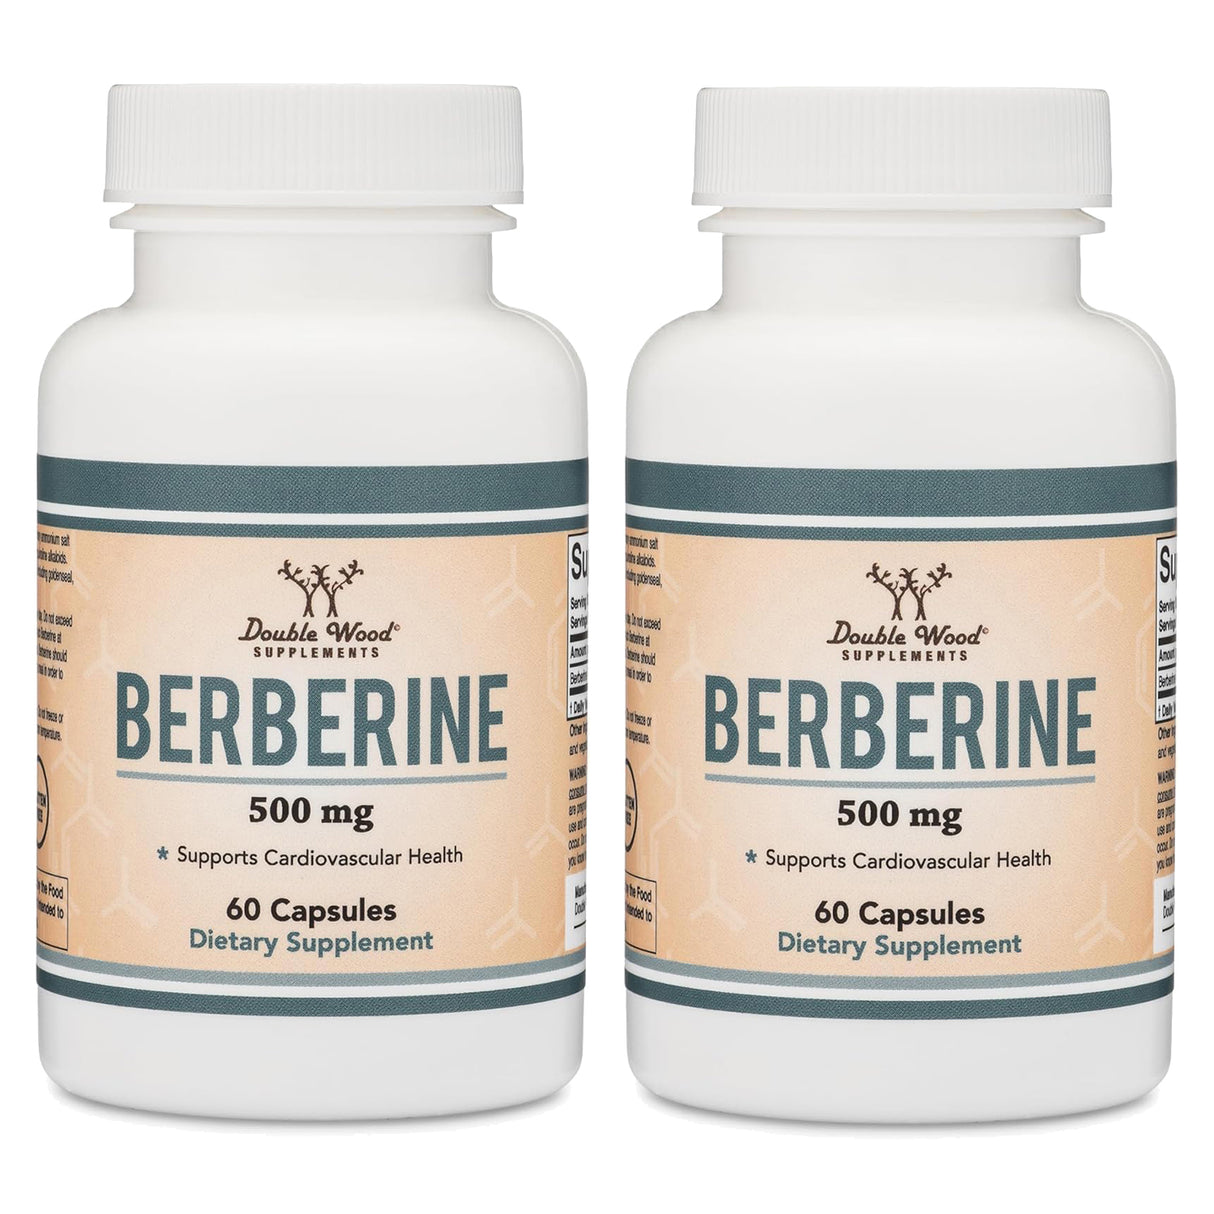 Berberine Double Pack